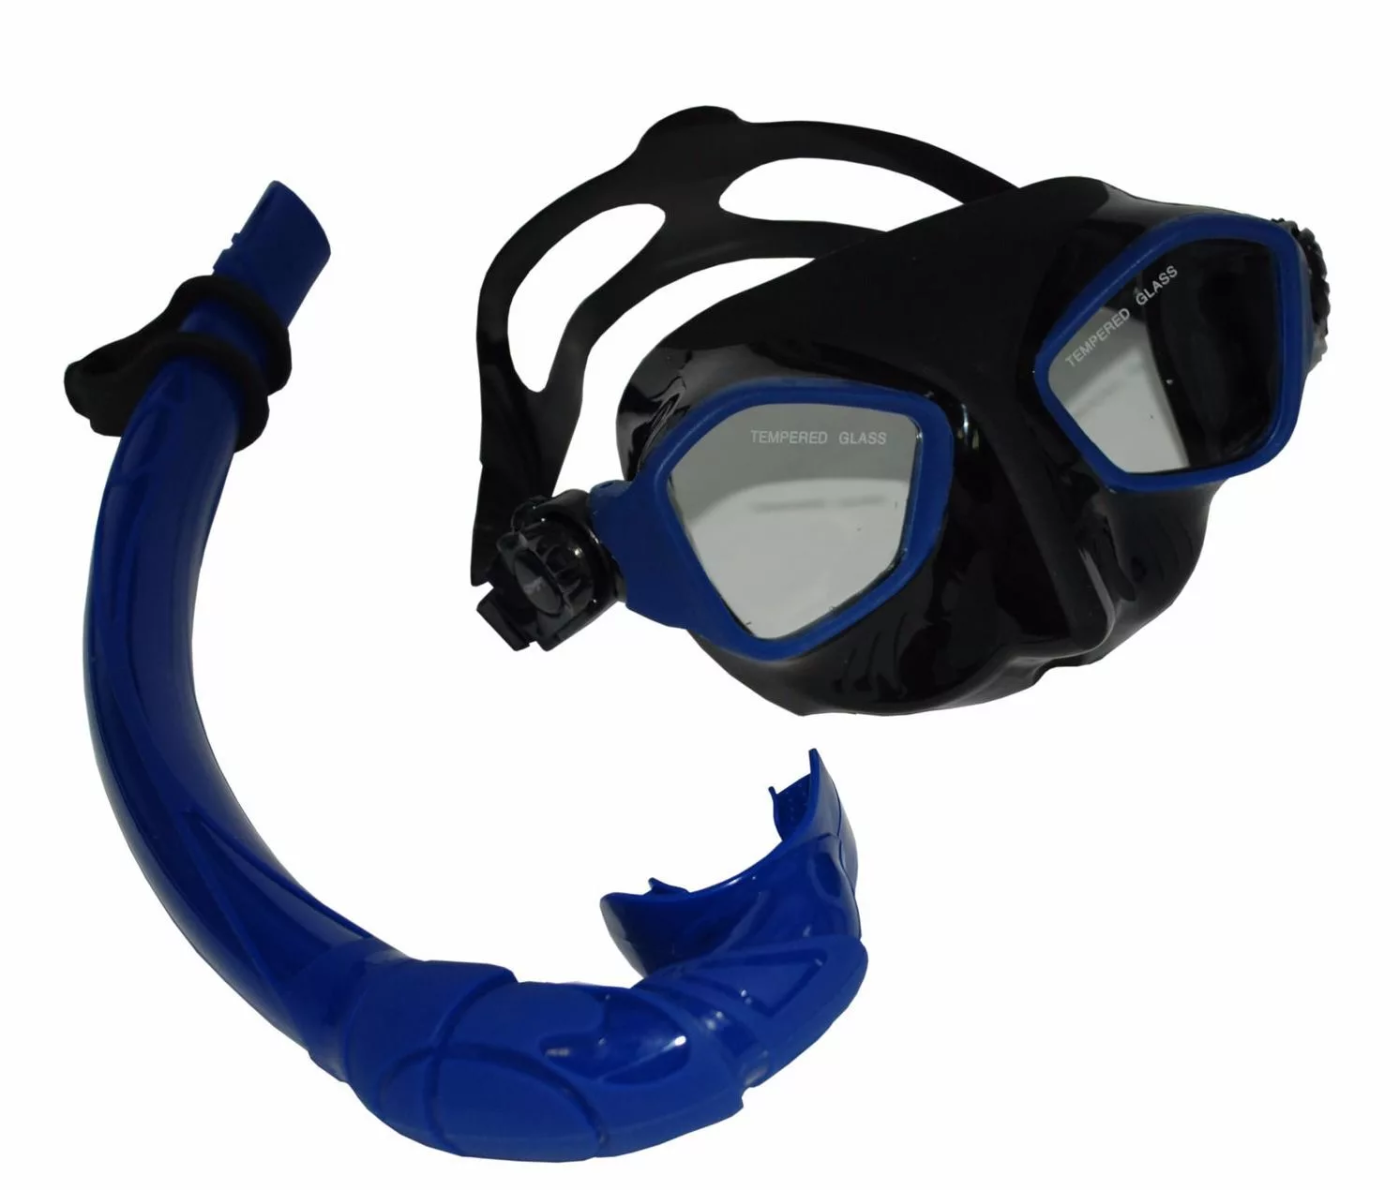 Маска Mondial для плавания. Маска для плавания м2526s. Маска для плавания Wave m-1328. Stingray маска для плавания. Маска для плавания москва